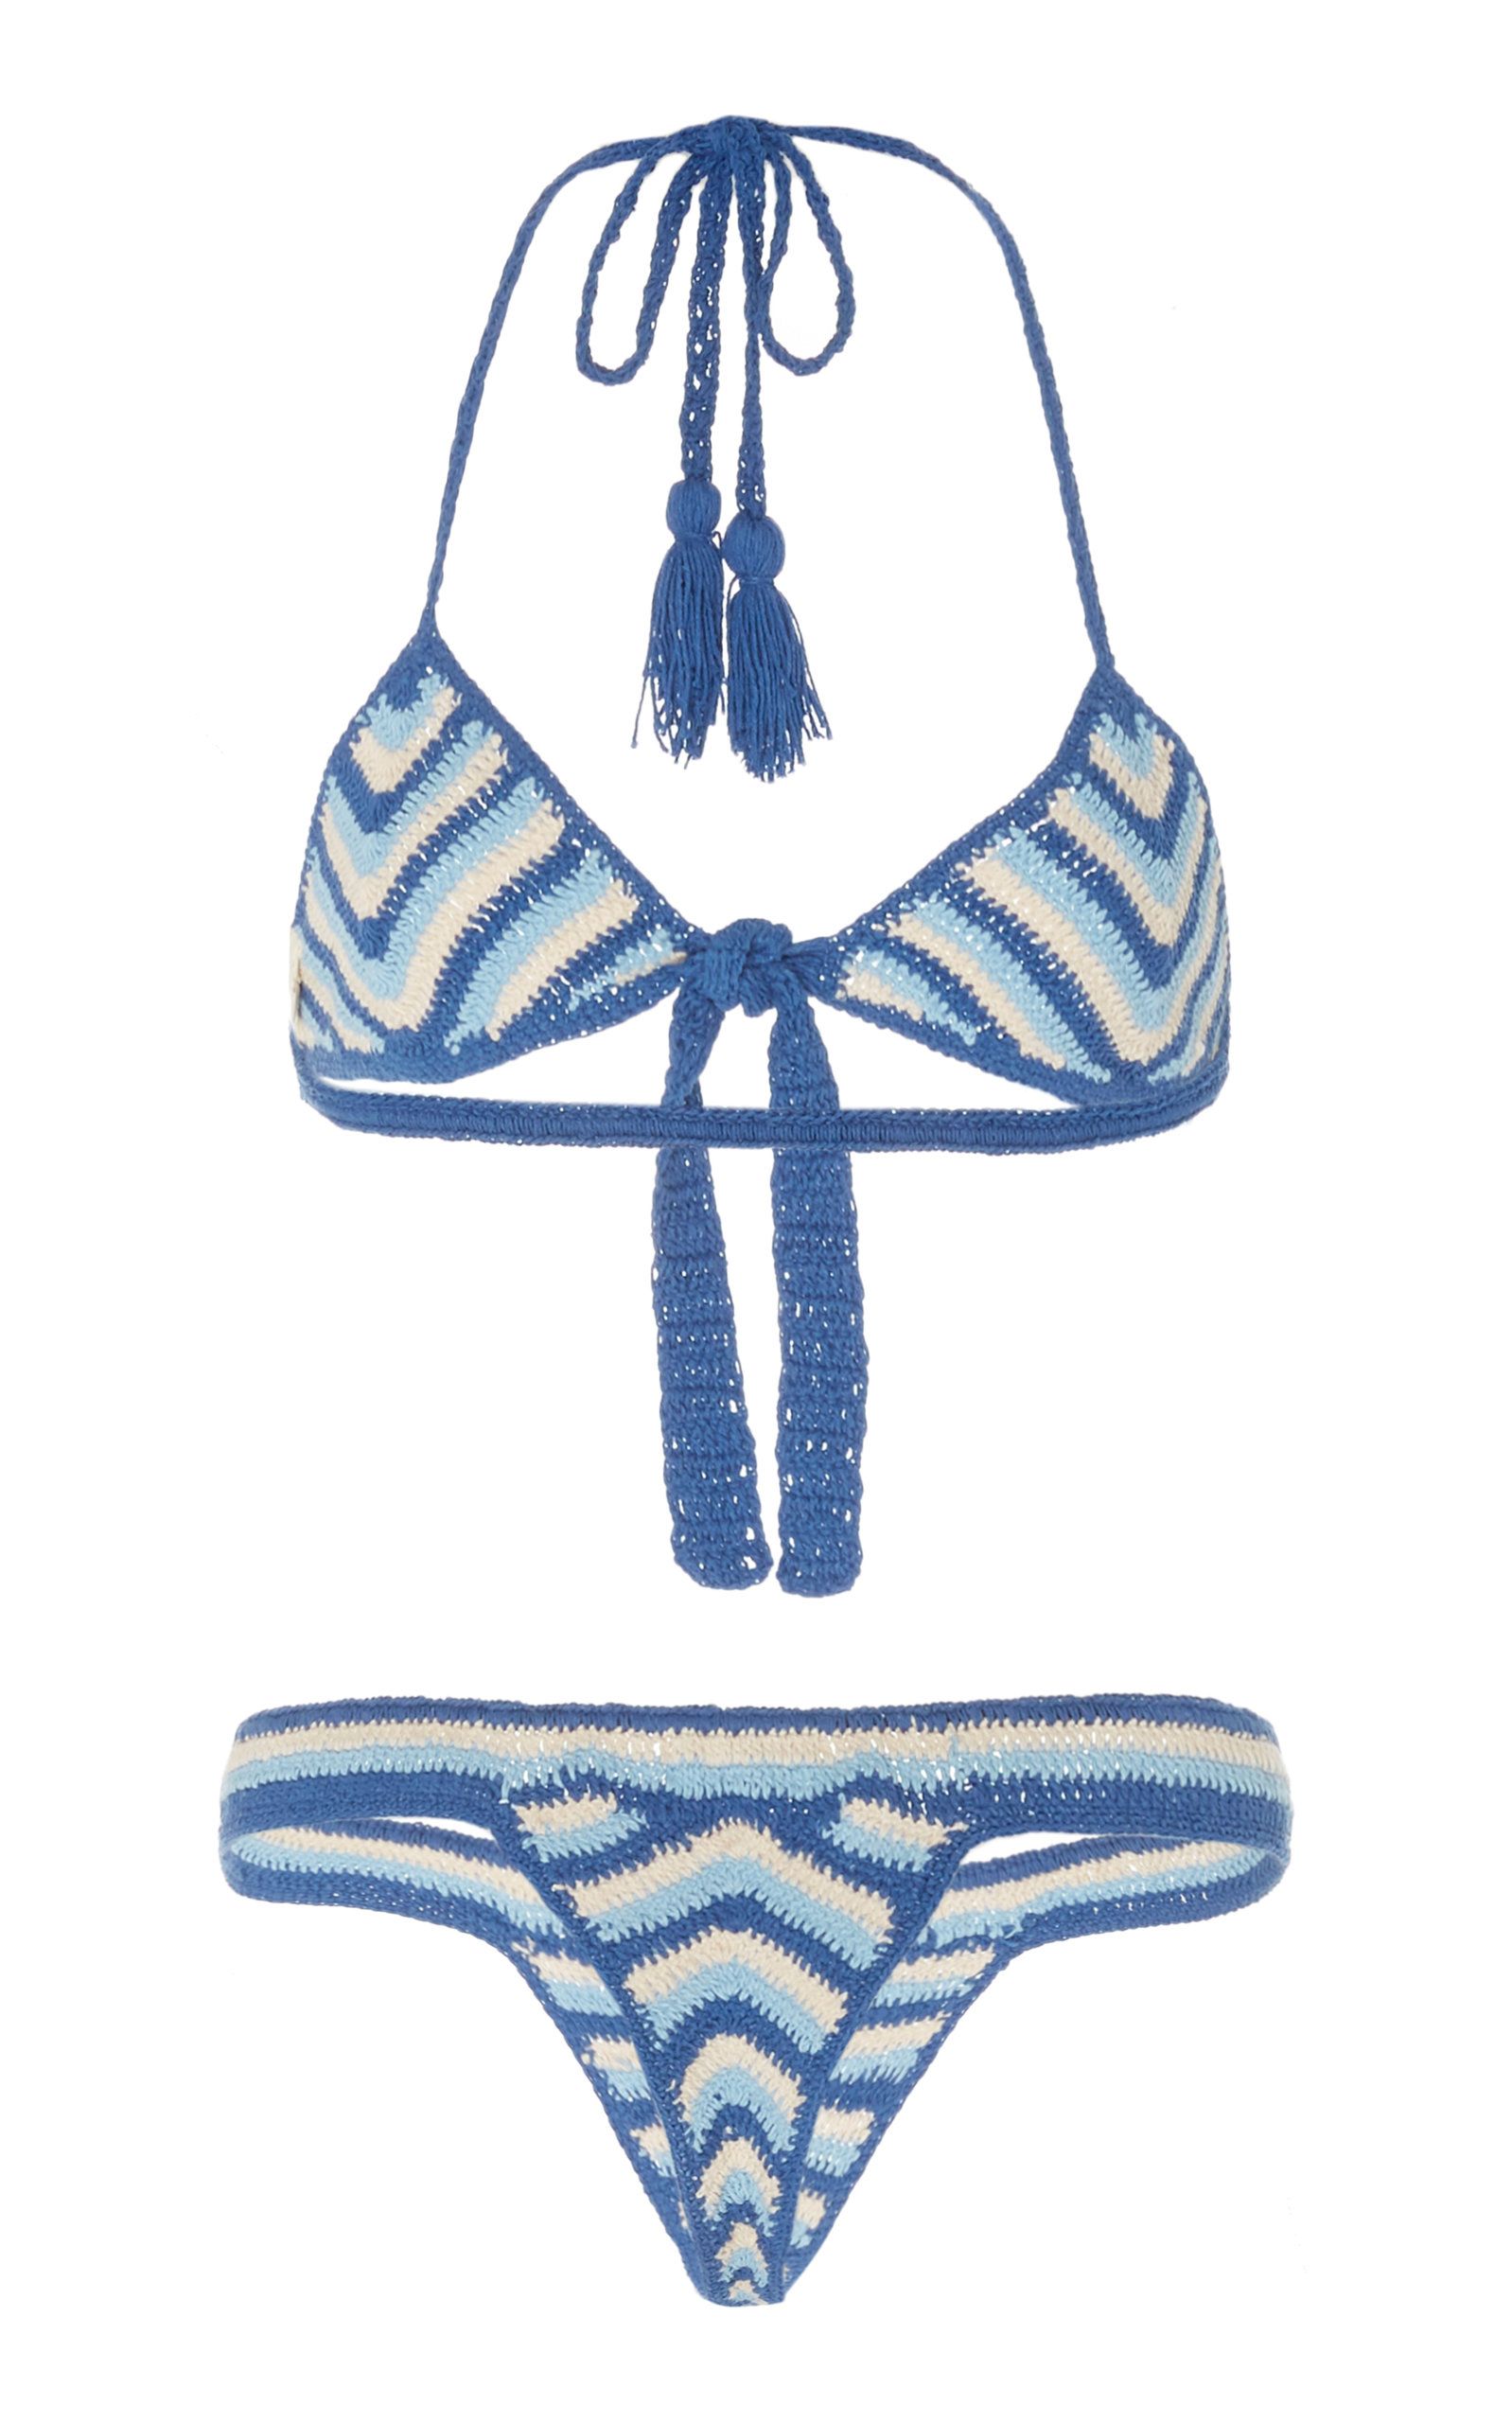 https://hips.hearstapps.com/vader-prod.s3.amazonaws.com/1590599430-large_akoia-swim-blue-iris-crocheted-cotton-bikini-set.jpg?crop=1xw:1xh;center,top